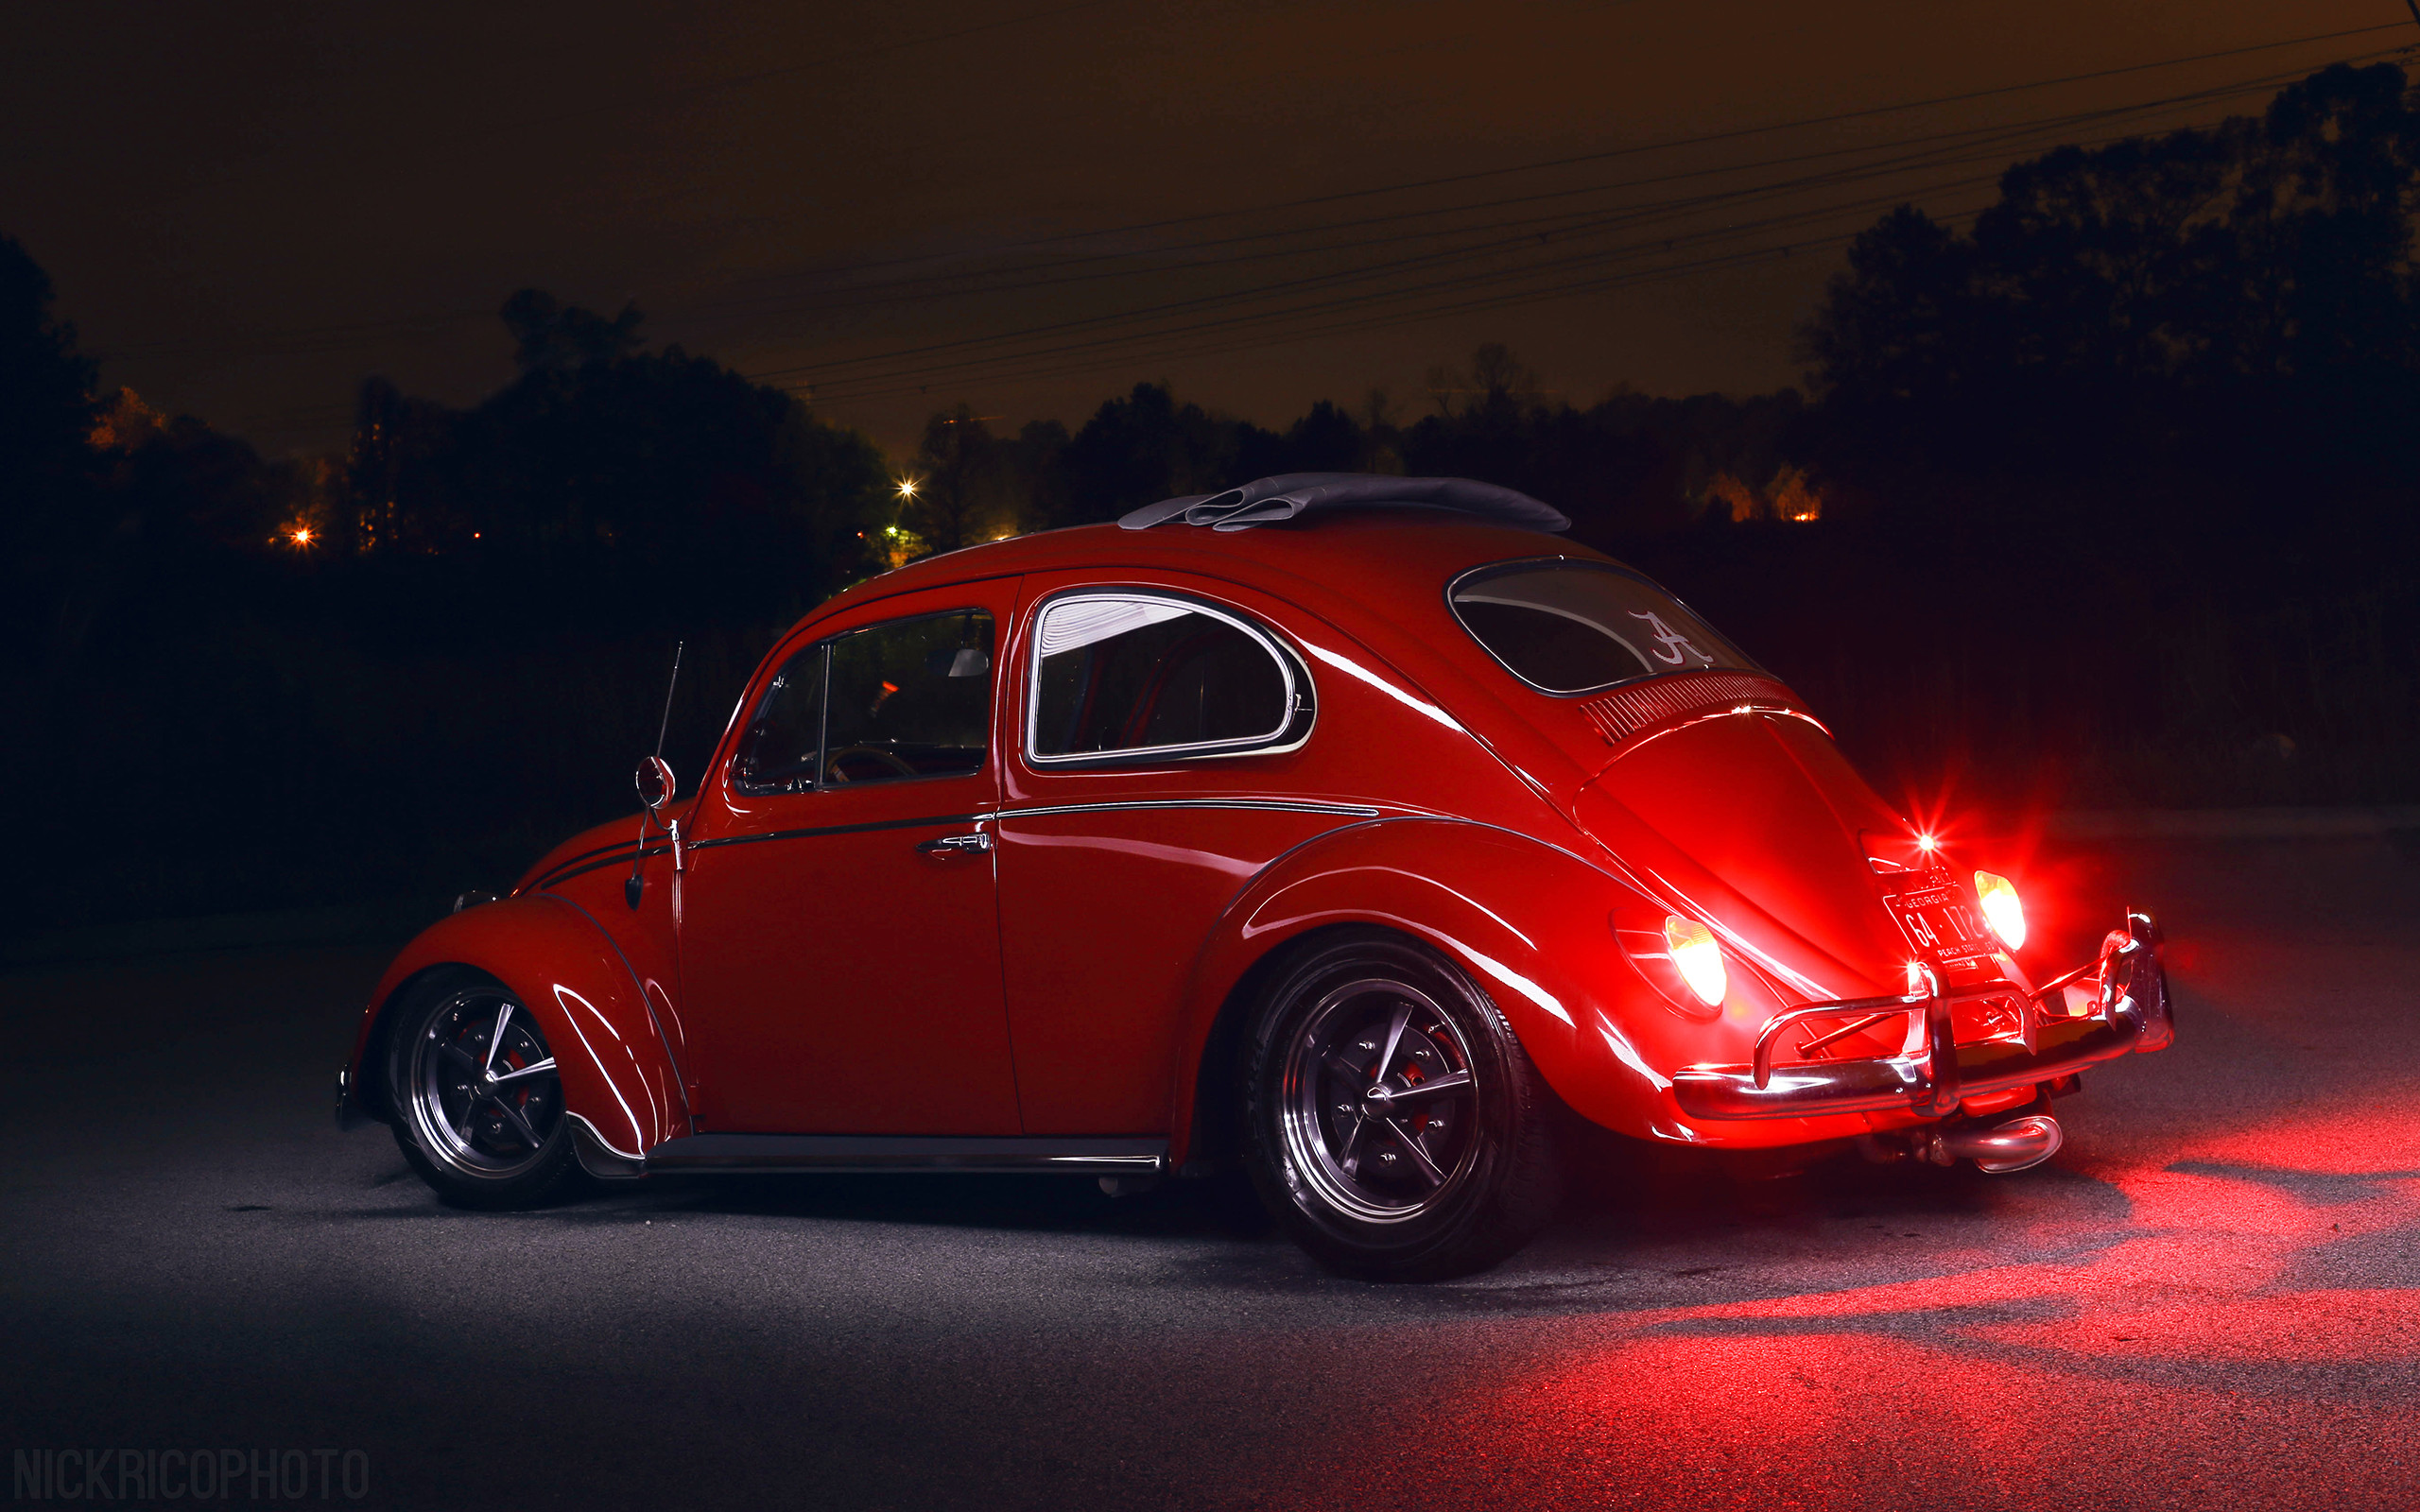 2560x1600 Explore and share Volkswagen Bug Wallpaper on WallpaperSafari